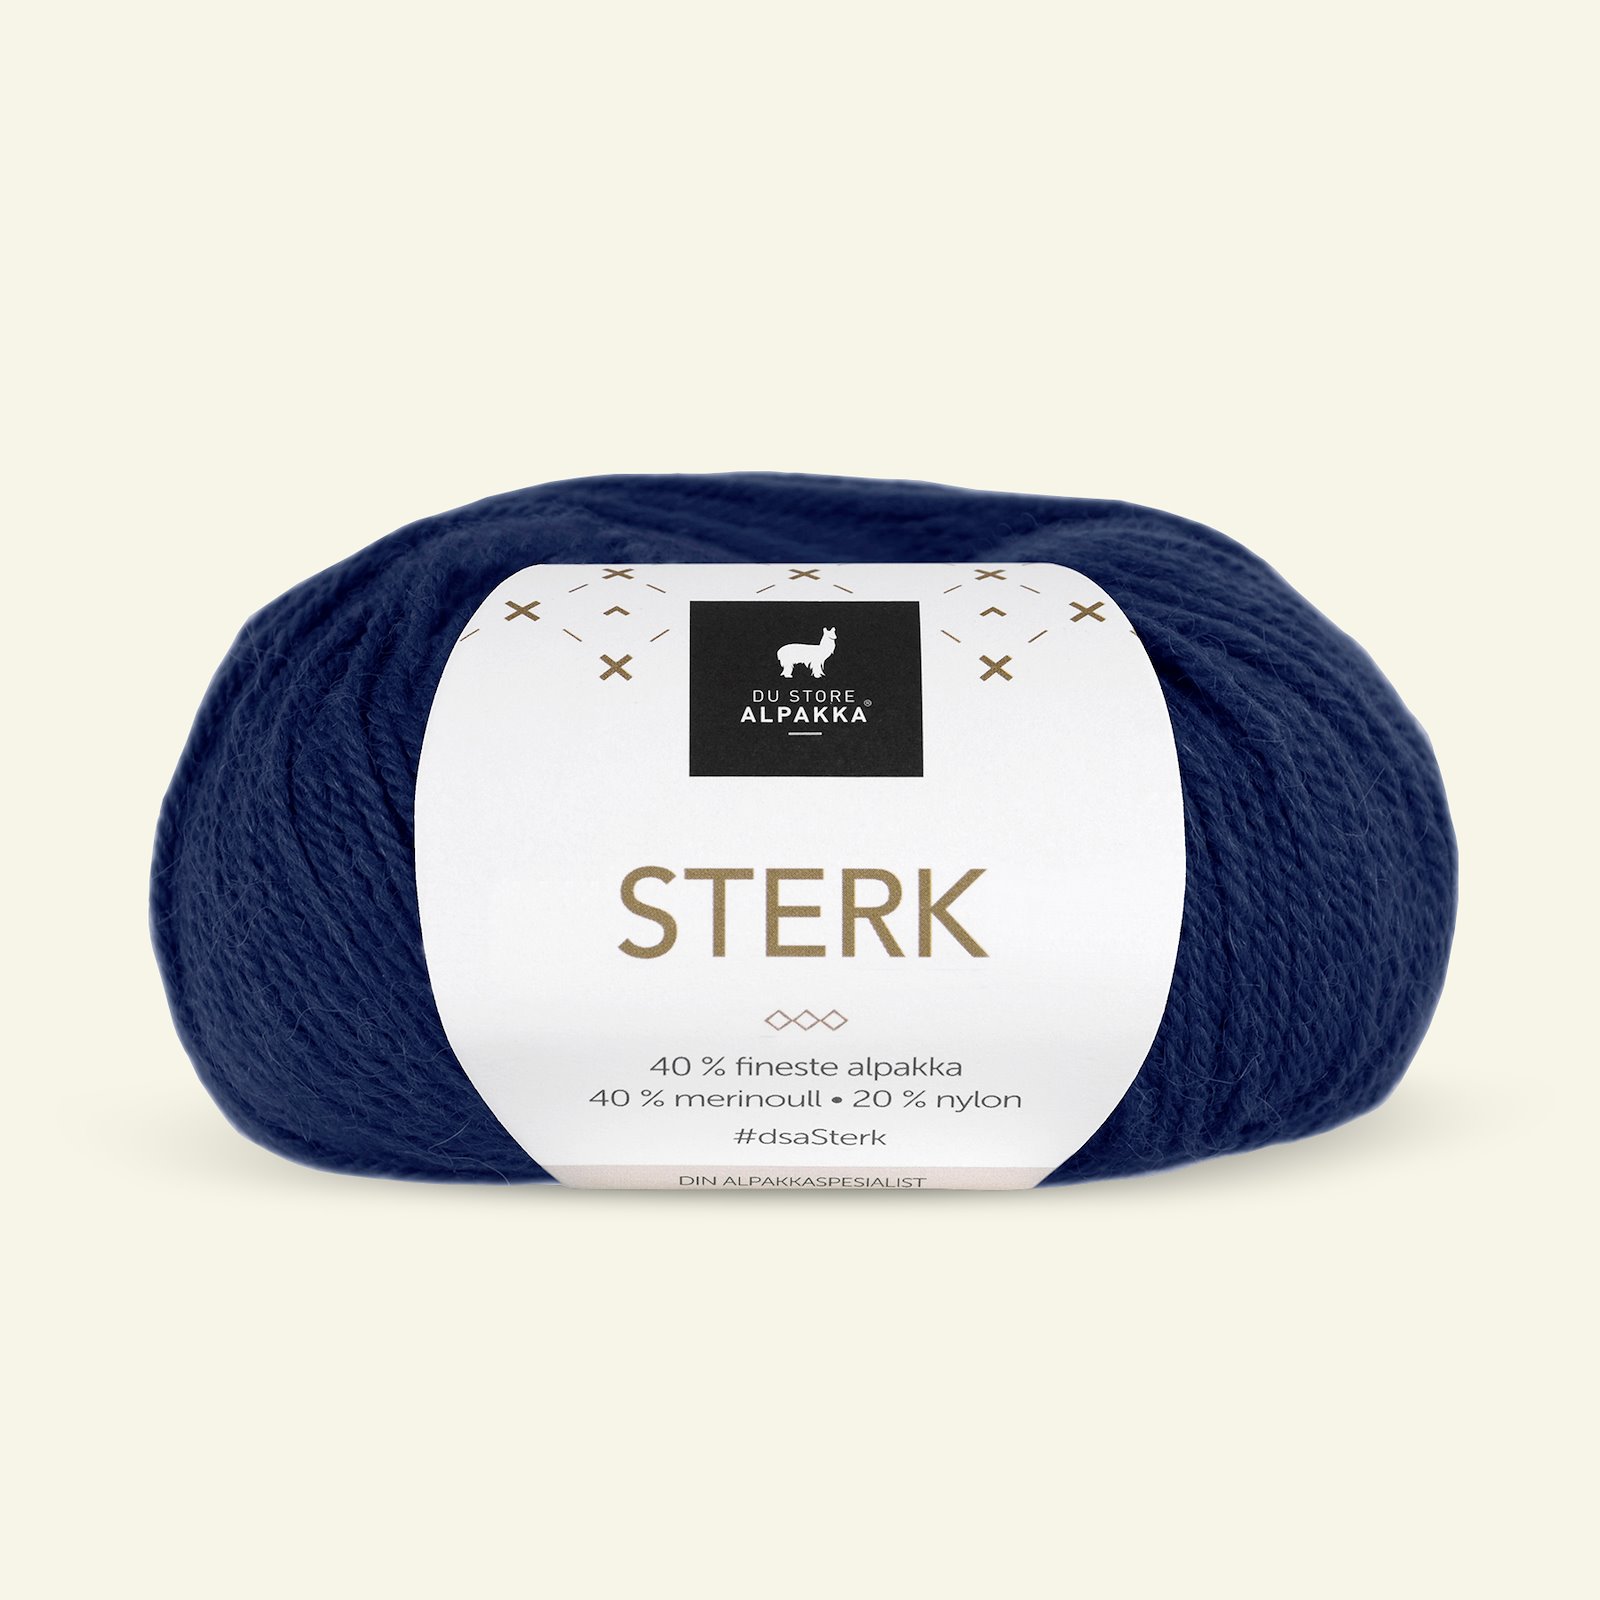 Du Store Alpakka, alpaca merino mixed yarn "Sterk", navy blue (827) 90000667_pack